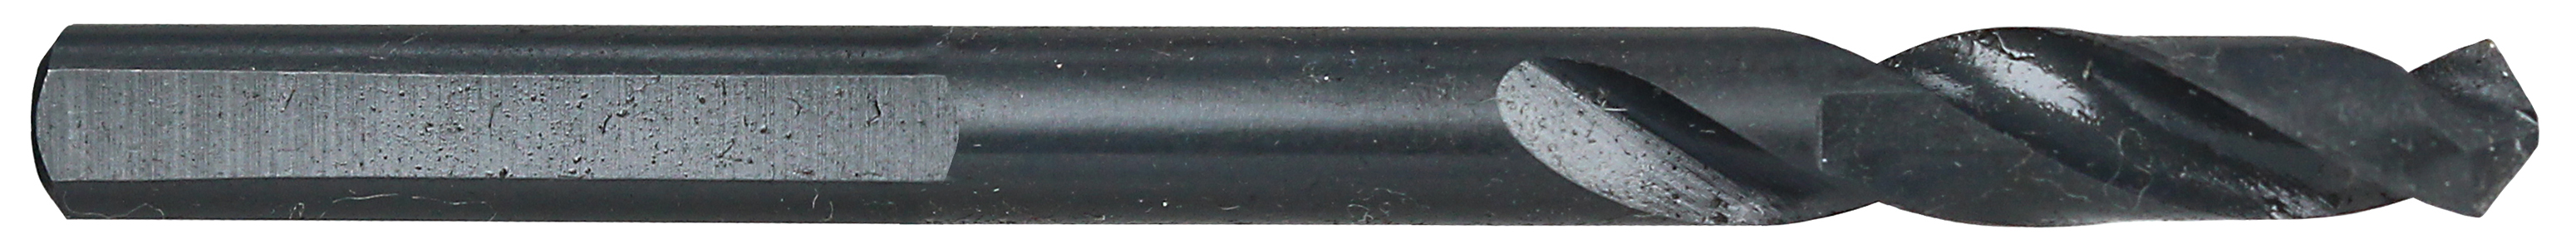 Pilot Drill, 1/4 in. bit diameter, 3-1/16 in. overall length, 3 flutes